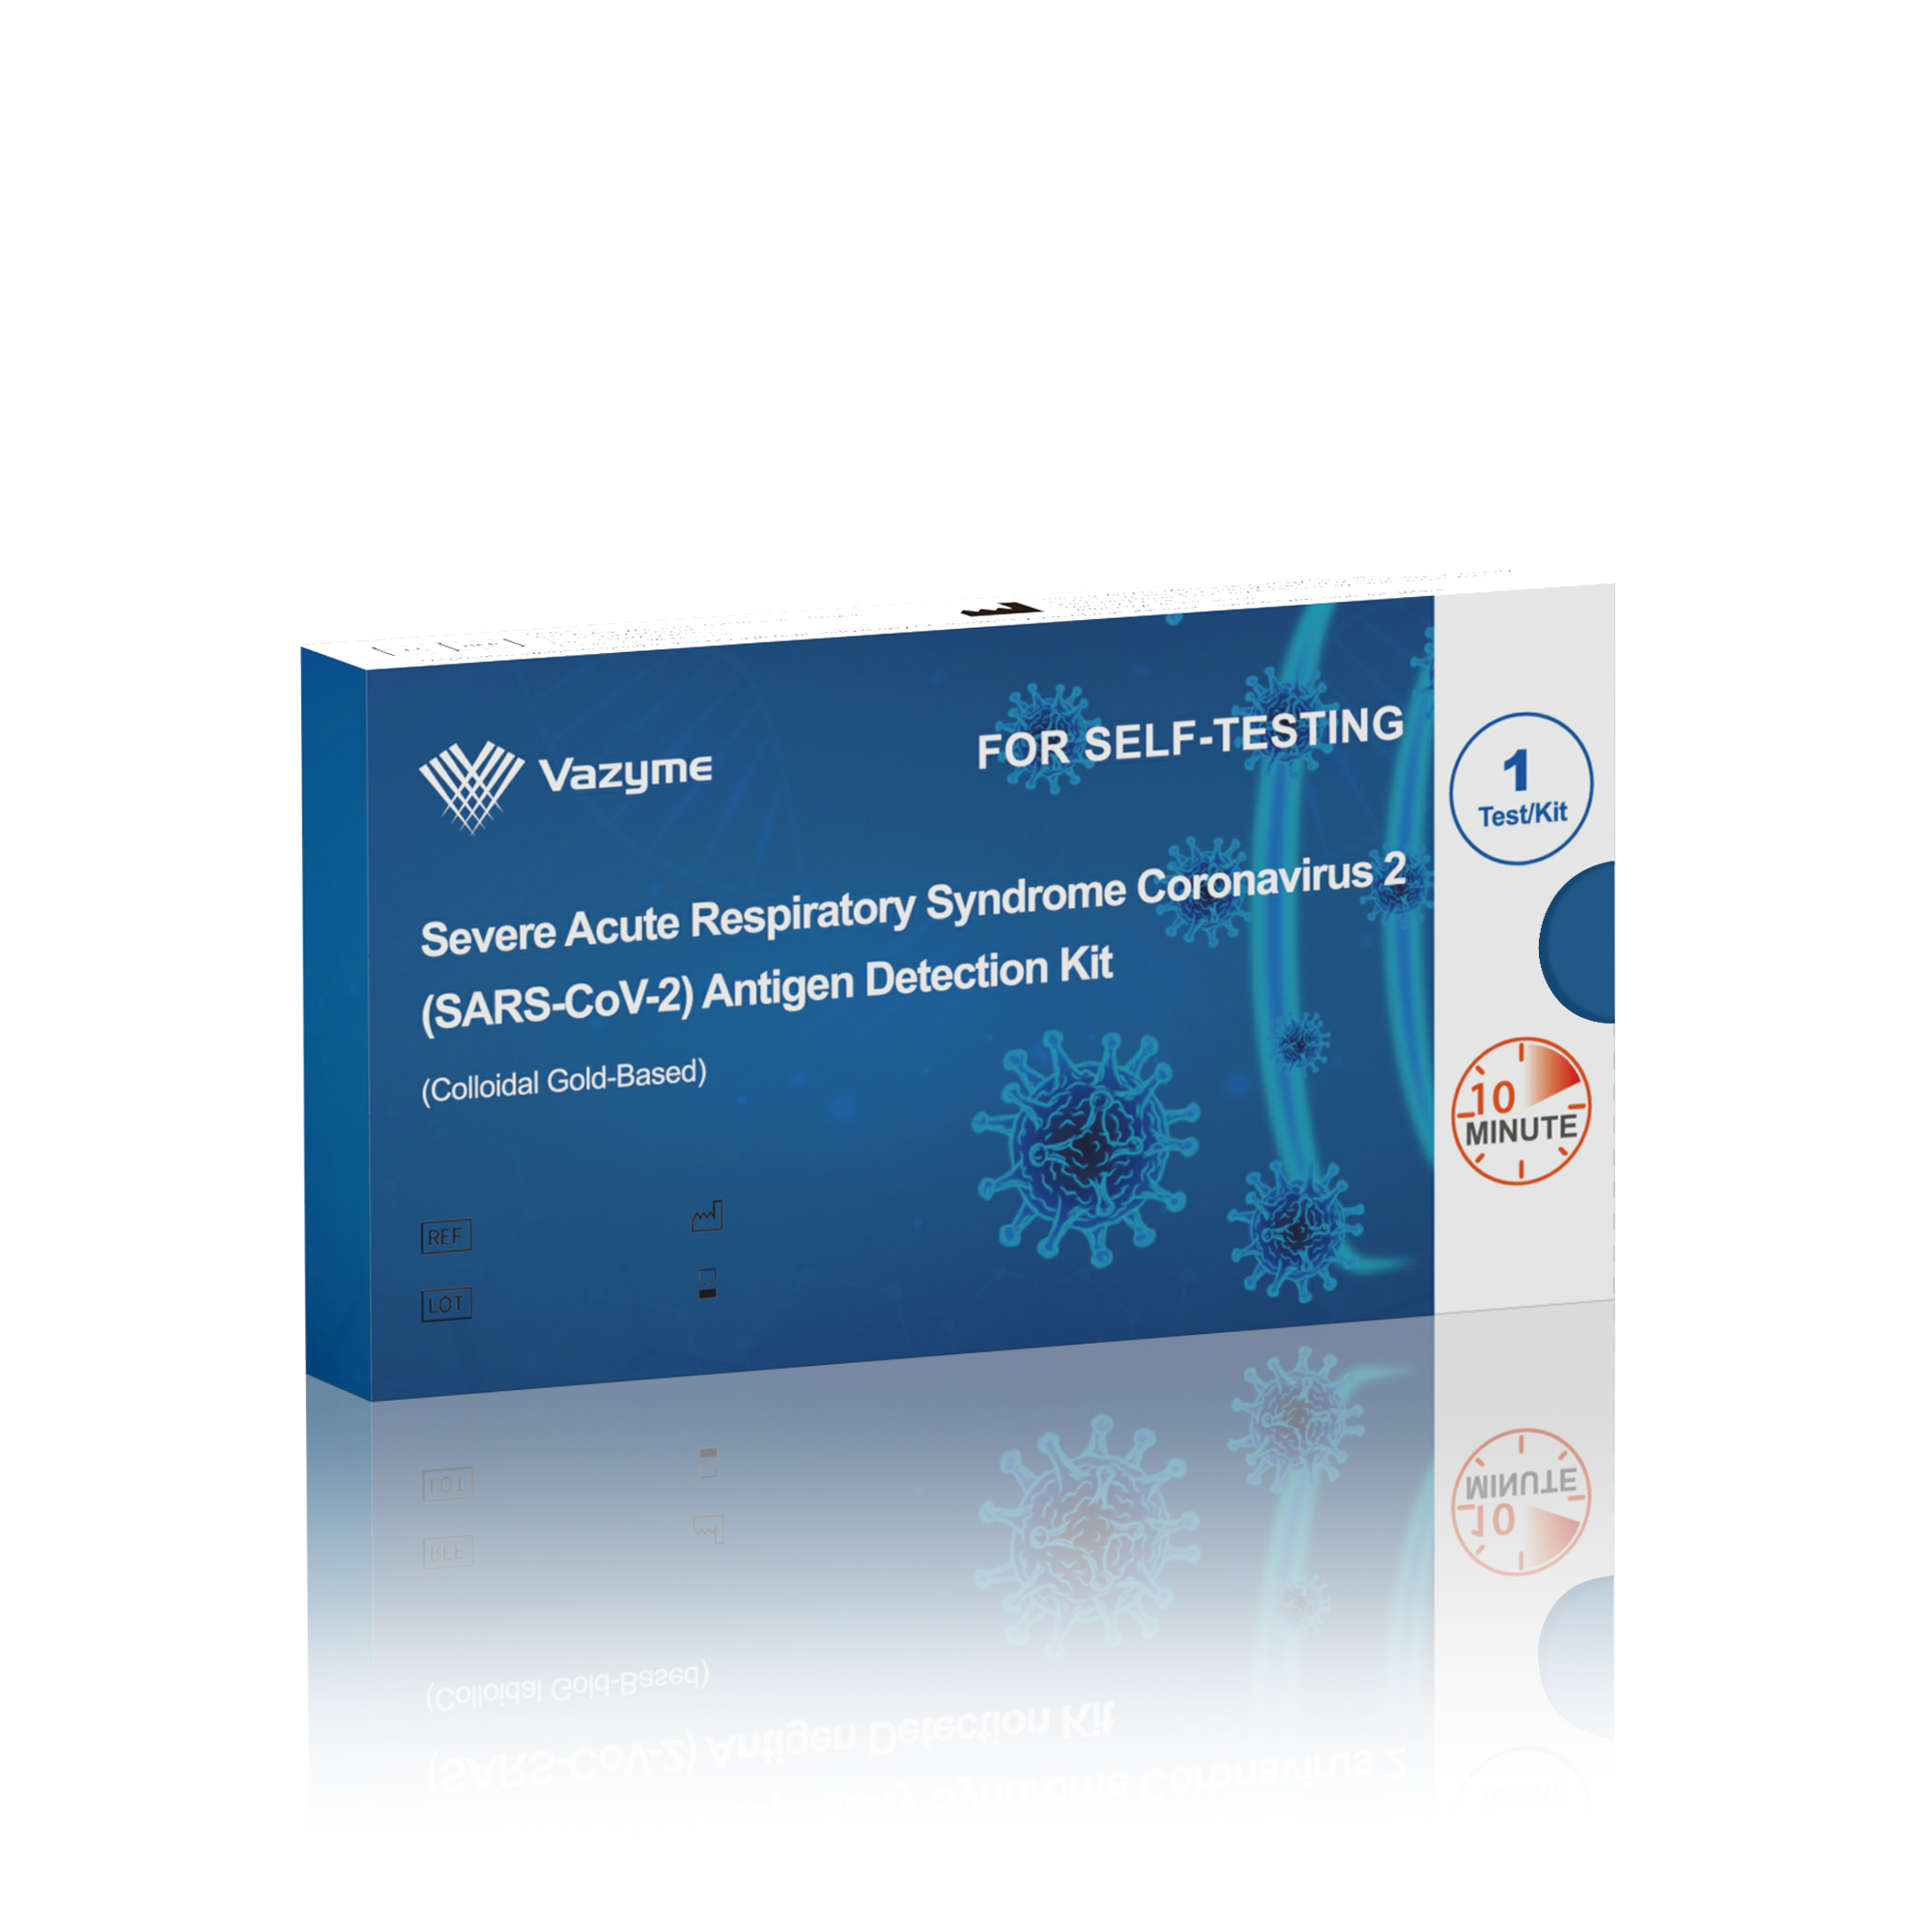 Severe Acute Respiratory Syndrome Coronavirus 2 (SARS-CoV-2) Antigen Detection Kit (Colloidal Gold-Based) For Self-Testing